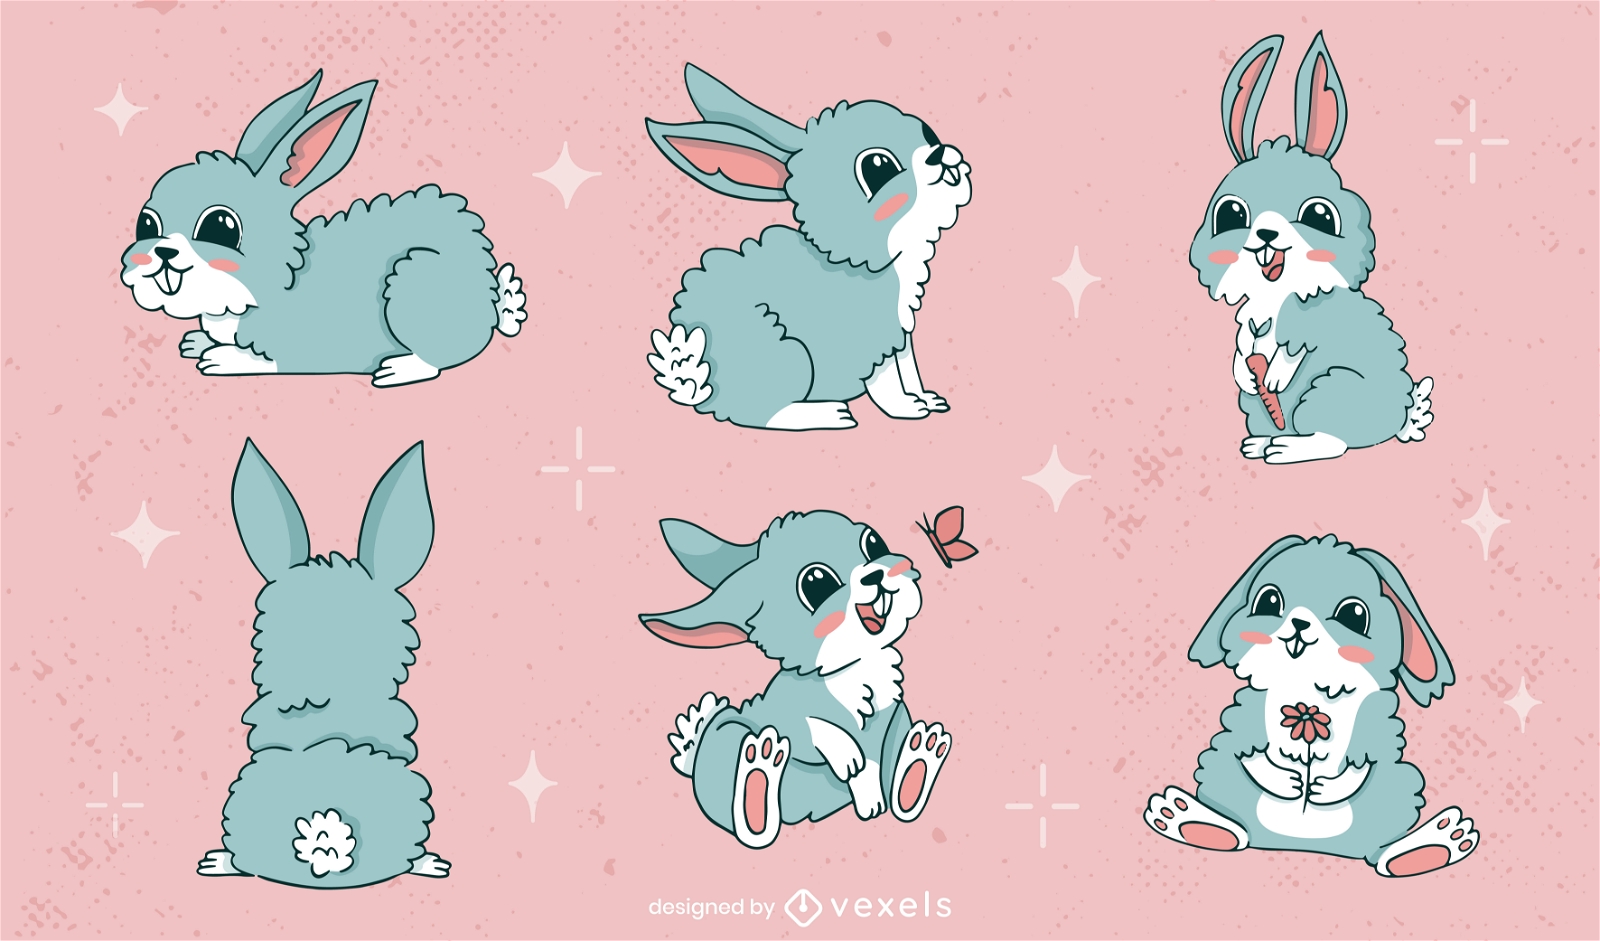 Cute bunnies character set